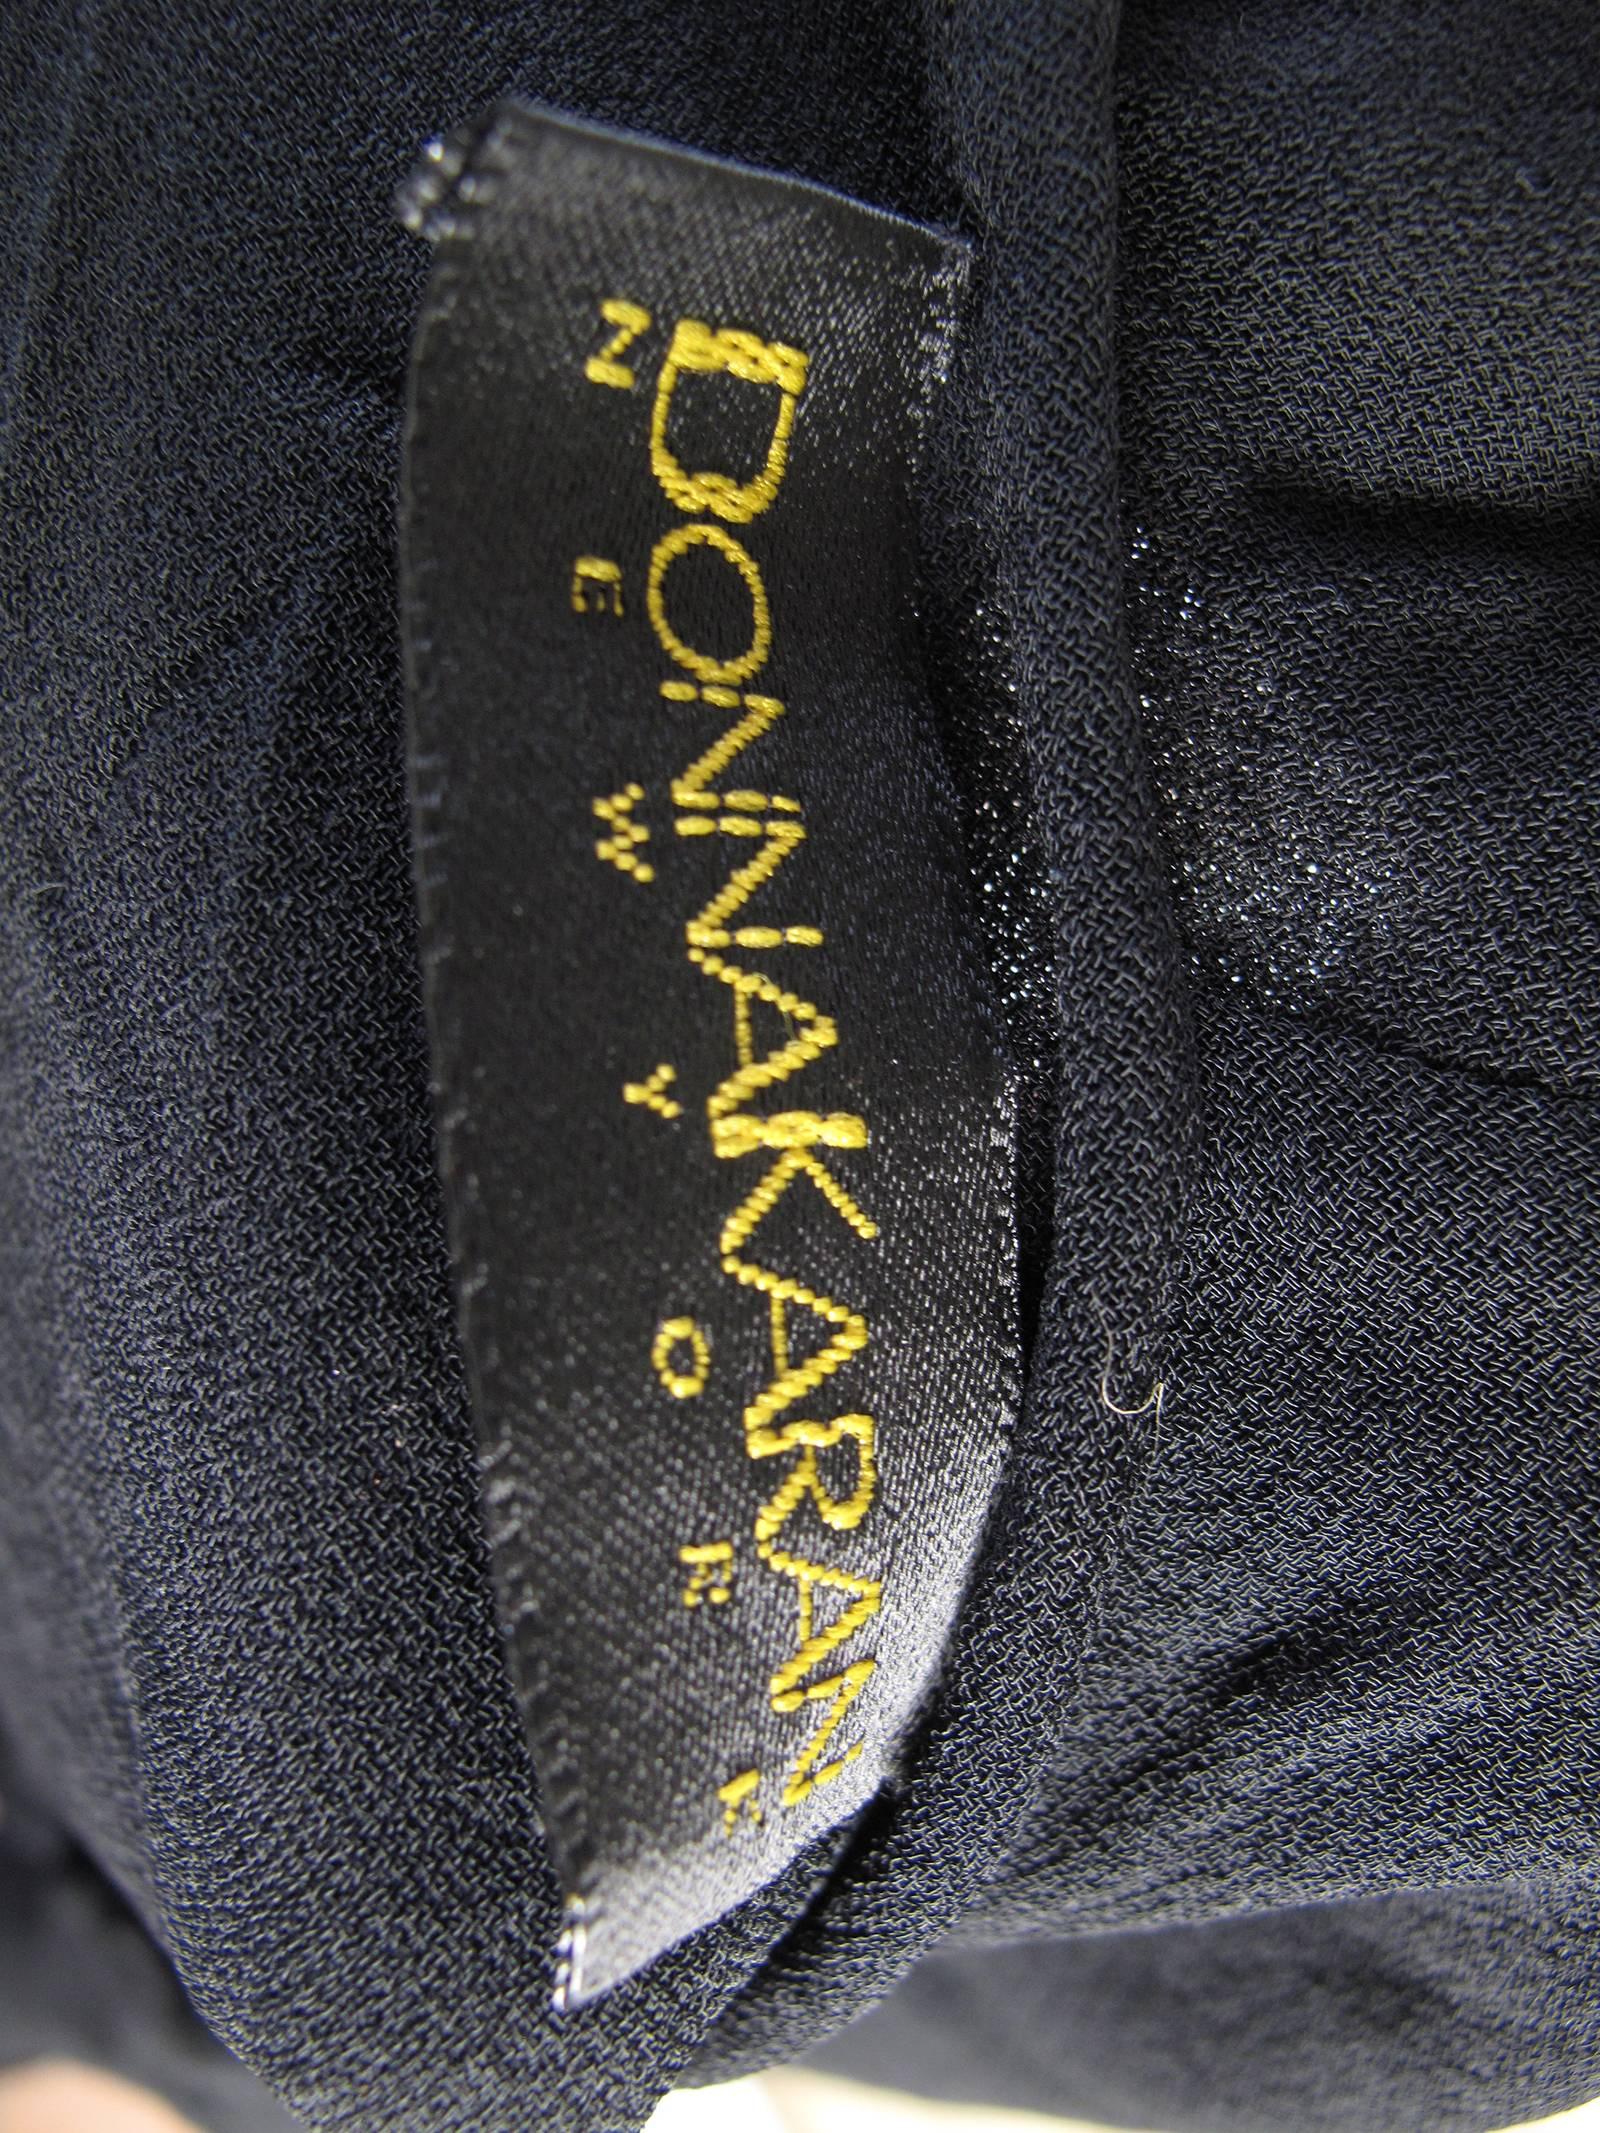 Black Donna Karan Body Suit, 1990s 